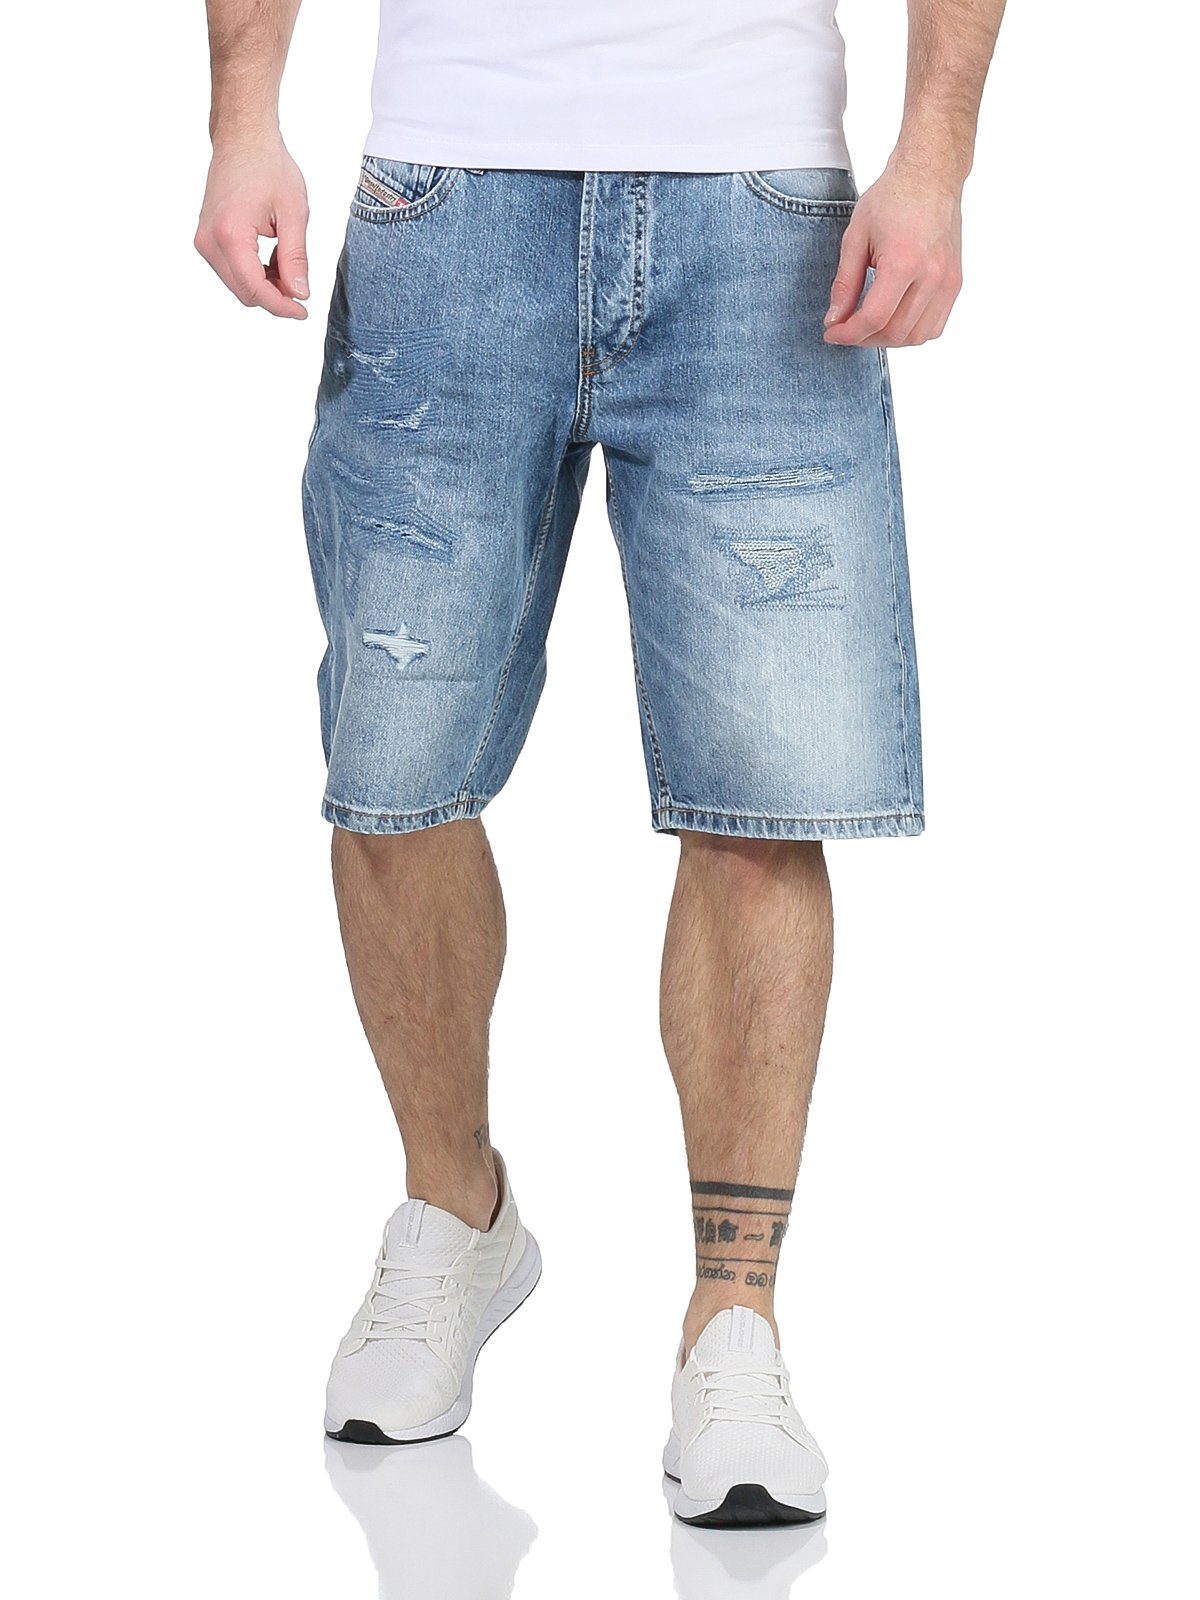 Look Herren Blau kurze Diesel Kroshort Used-Look RG48R Shorts, Shorts Hose Vintage Jeans Jeansshorts dezenter RB012